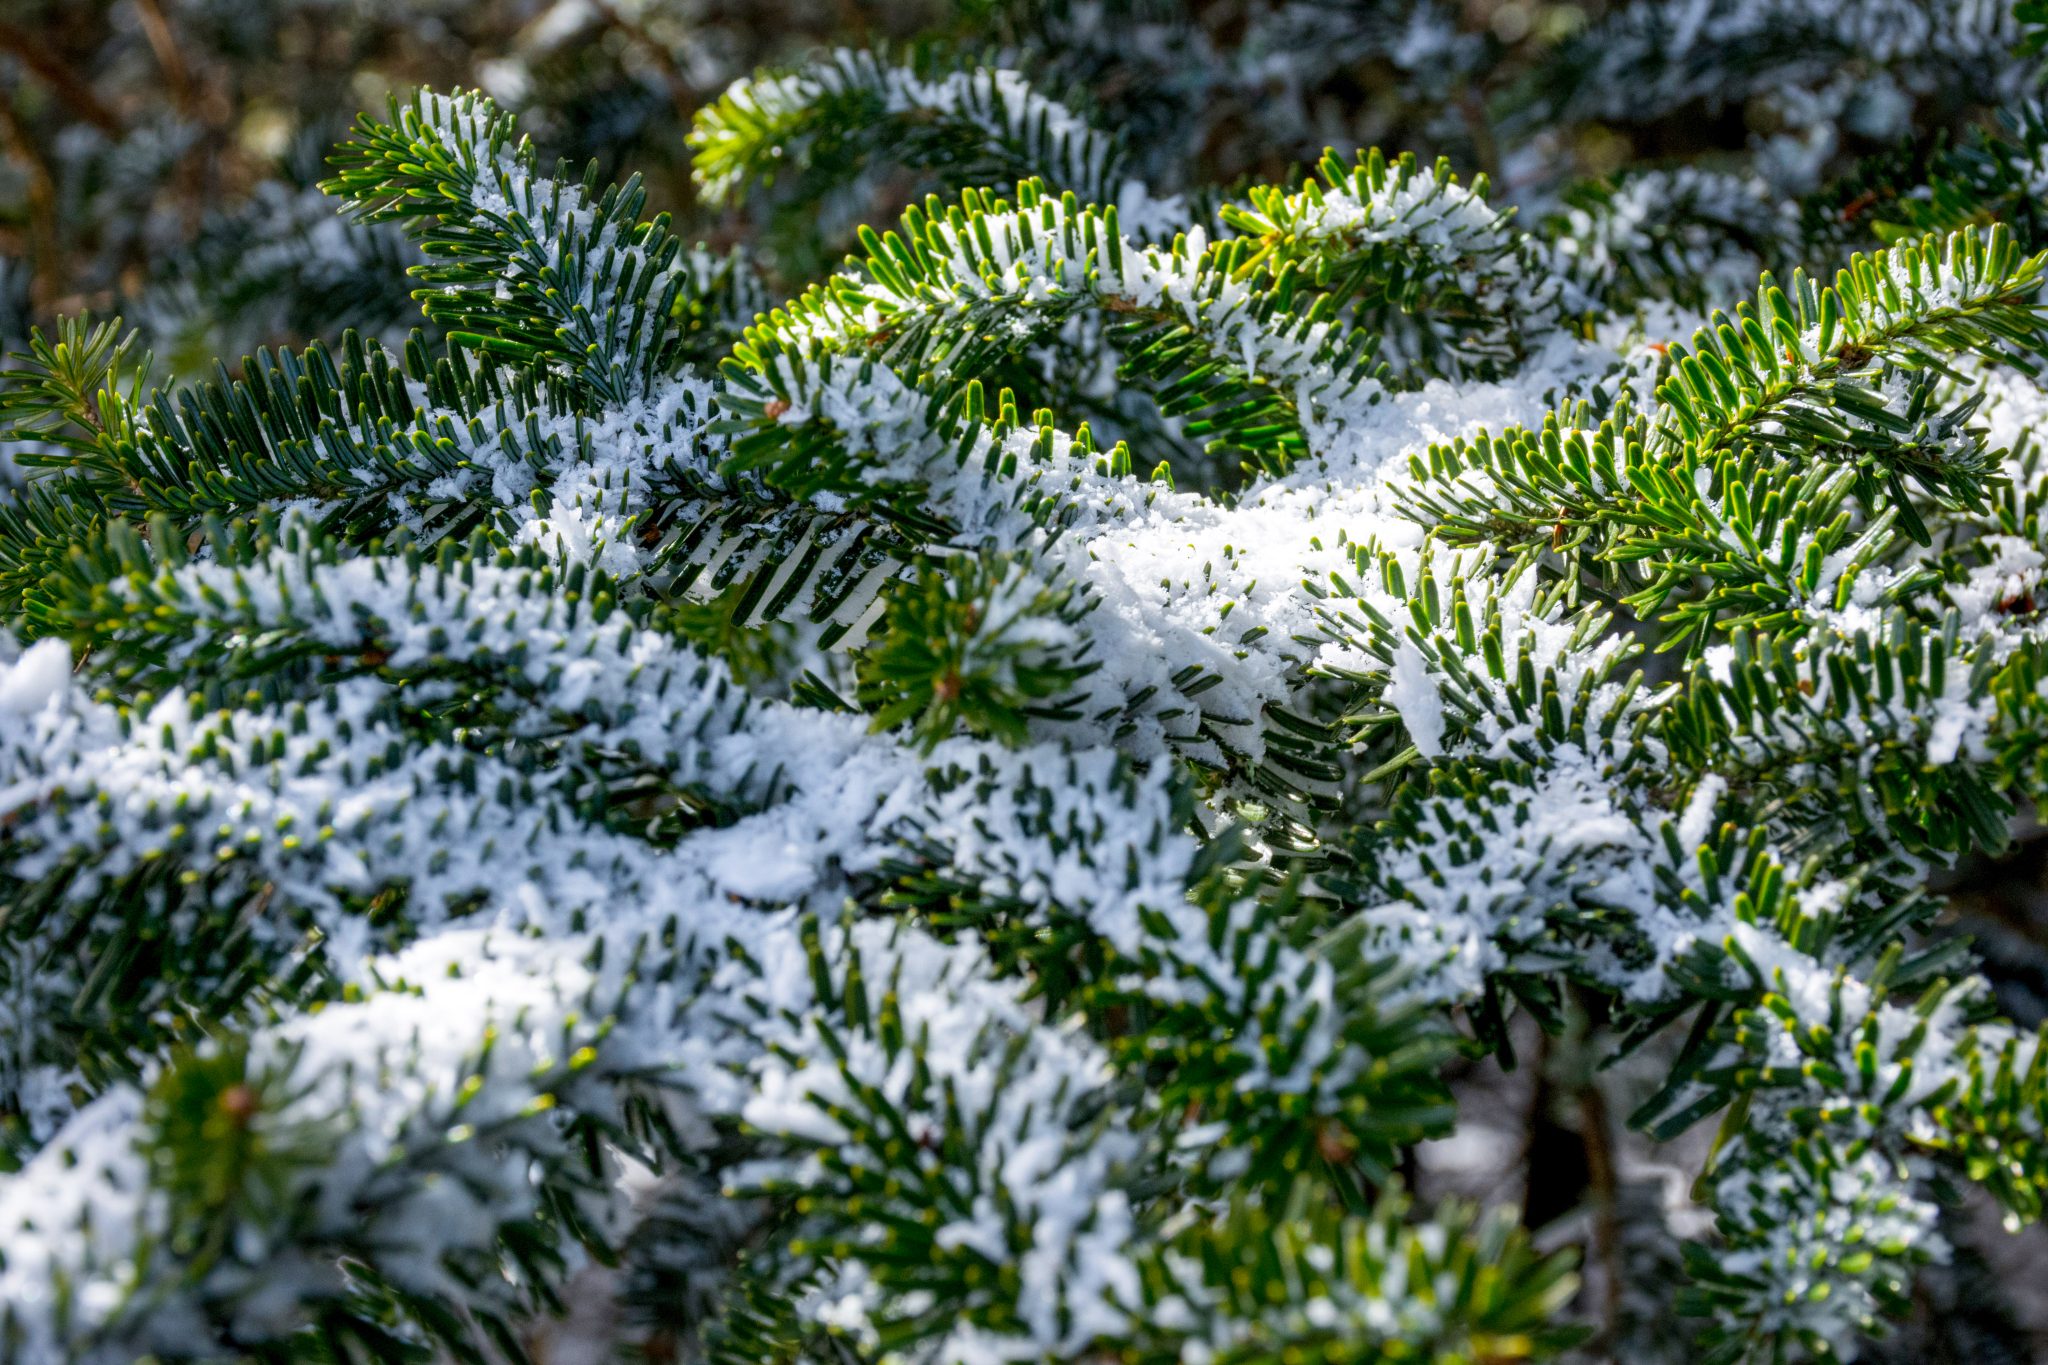 Close-up of snow on pine tree needles